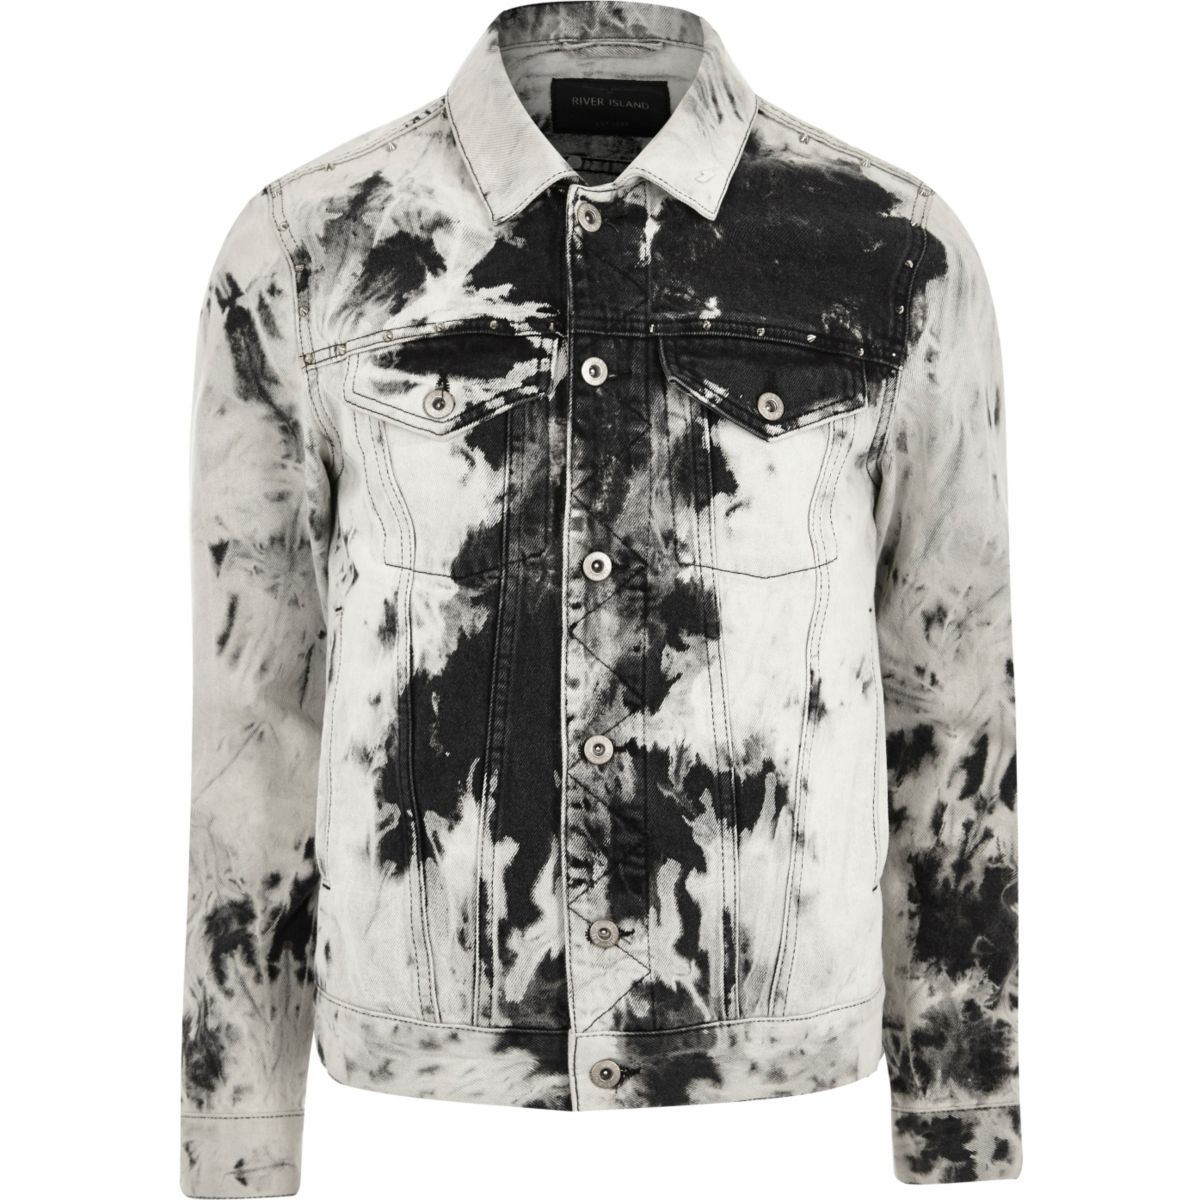 Black and white acid wash denim jacket - Coats & Jackets - Sale - men